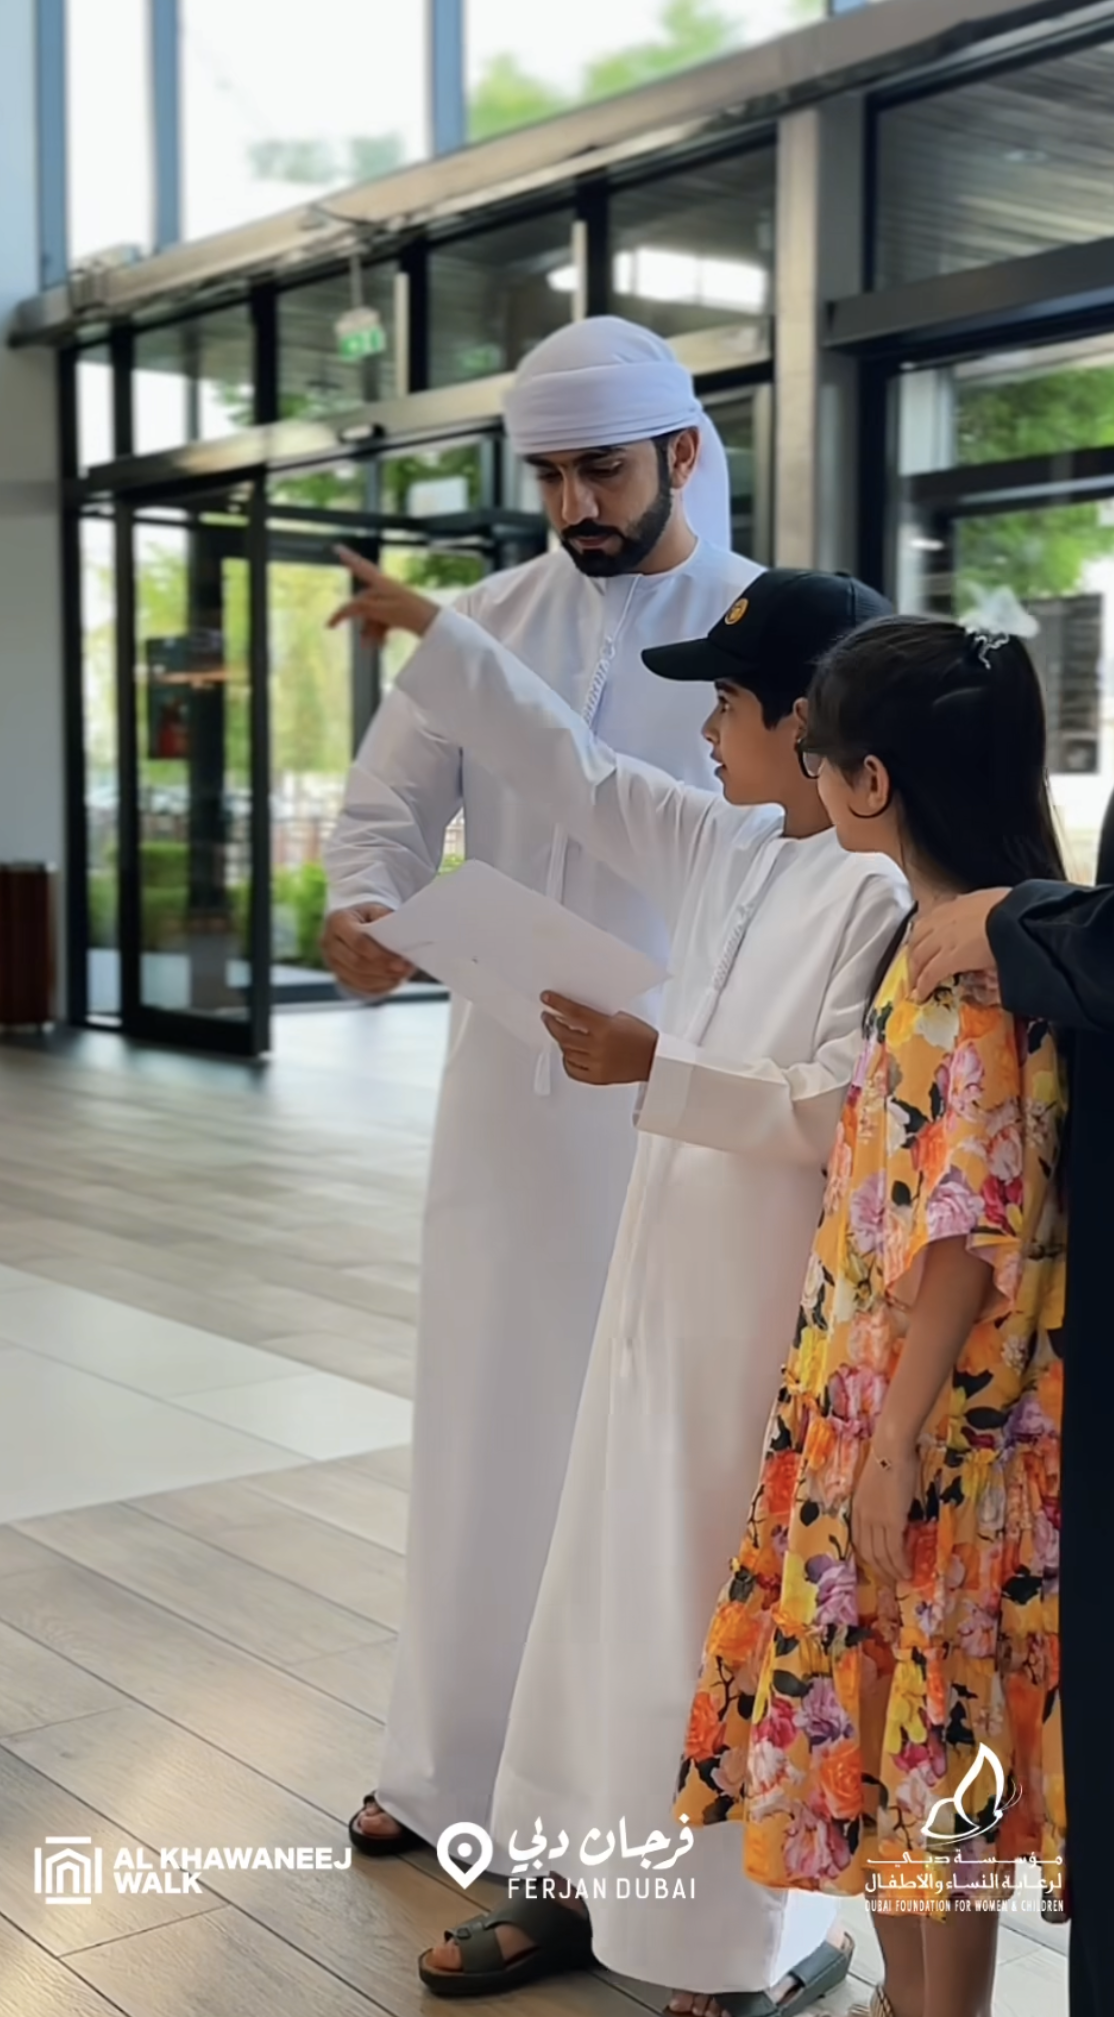 DFWAC, Ferjan Dubai, and Al Khawaneej Walk Join Forces for a Spectacular 'Al Khawaneej Treasure Hunt' Event Celebrating International Day of Families